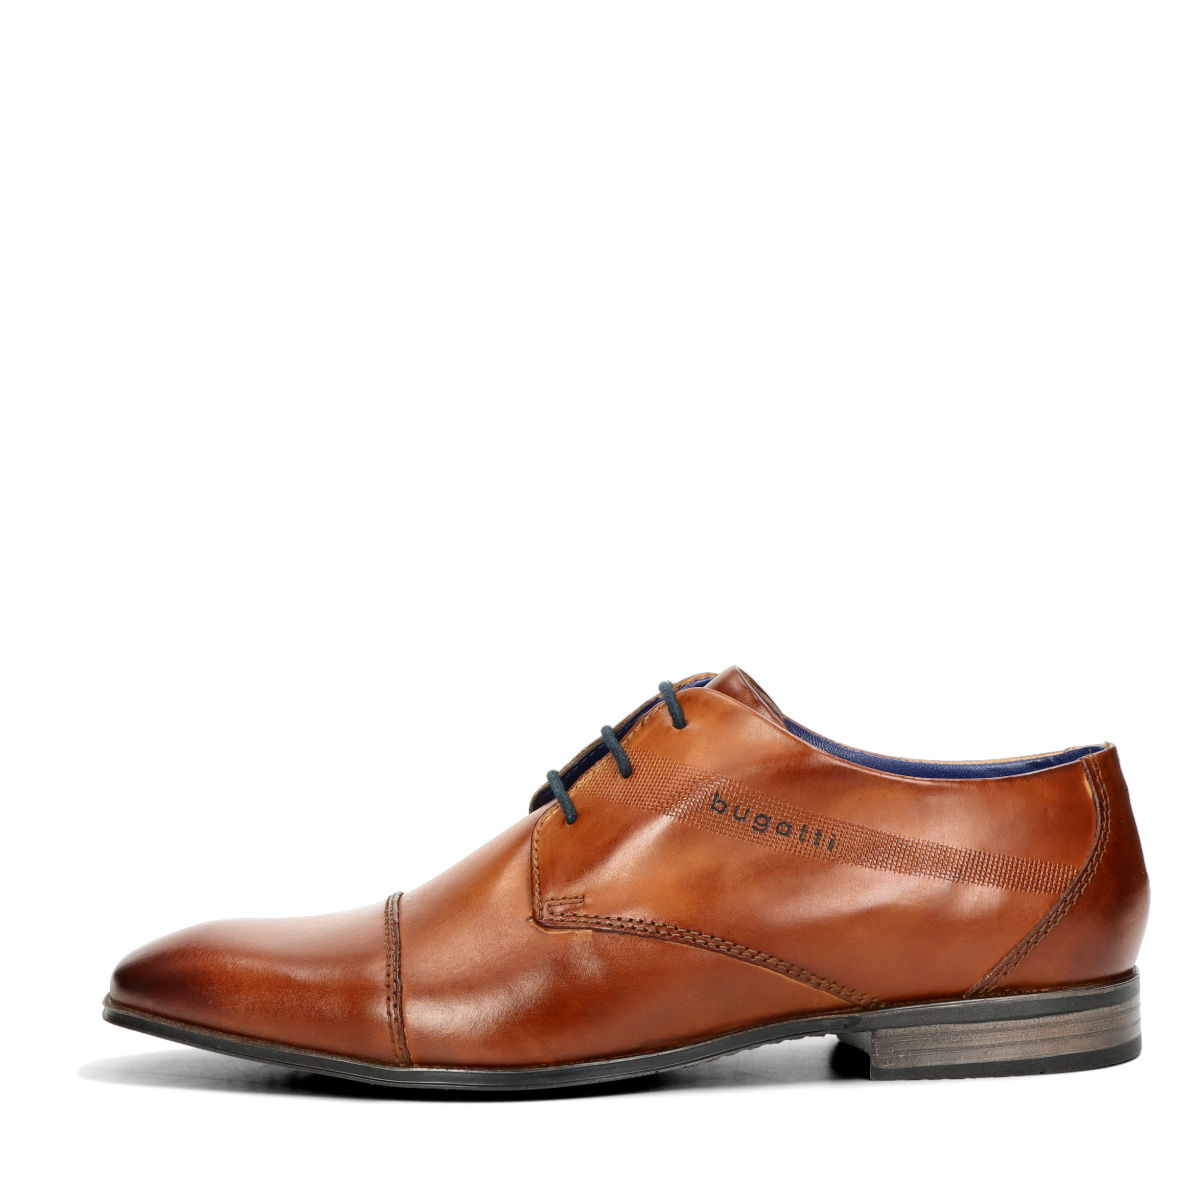 Bugatti men\'s leather formal shoes - cognac brown